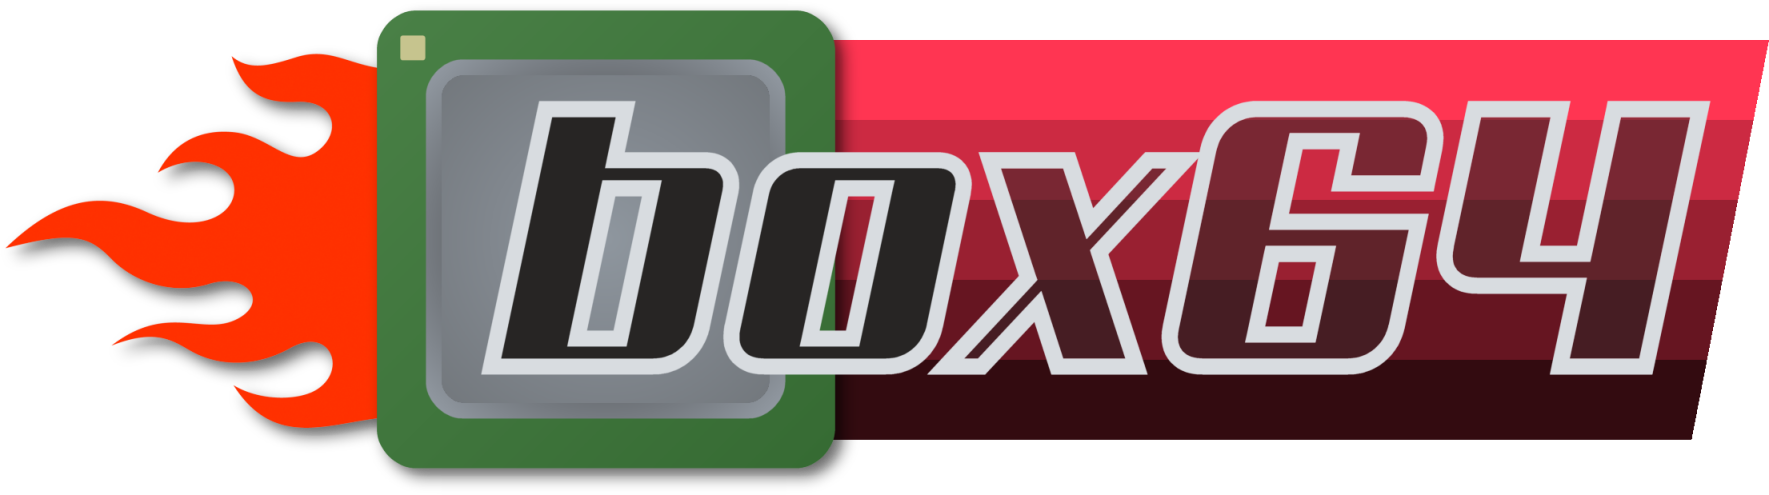 Box64_Logo